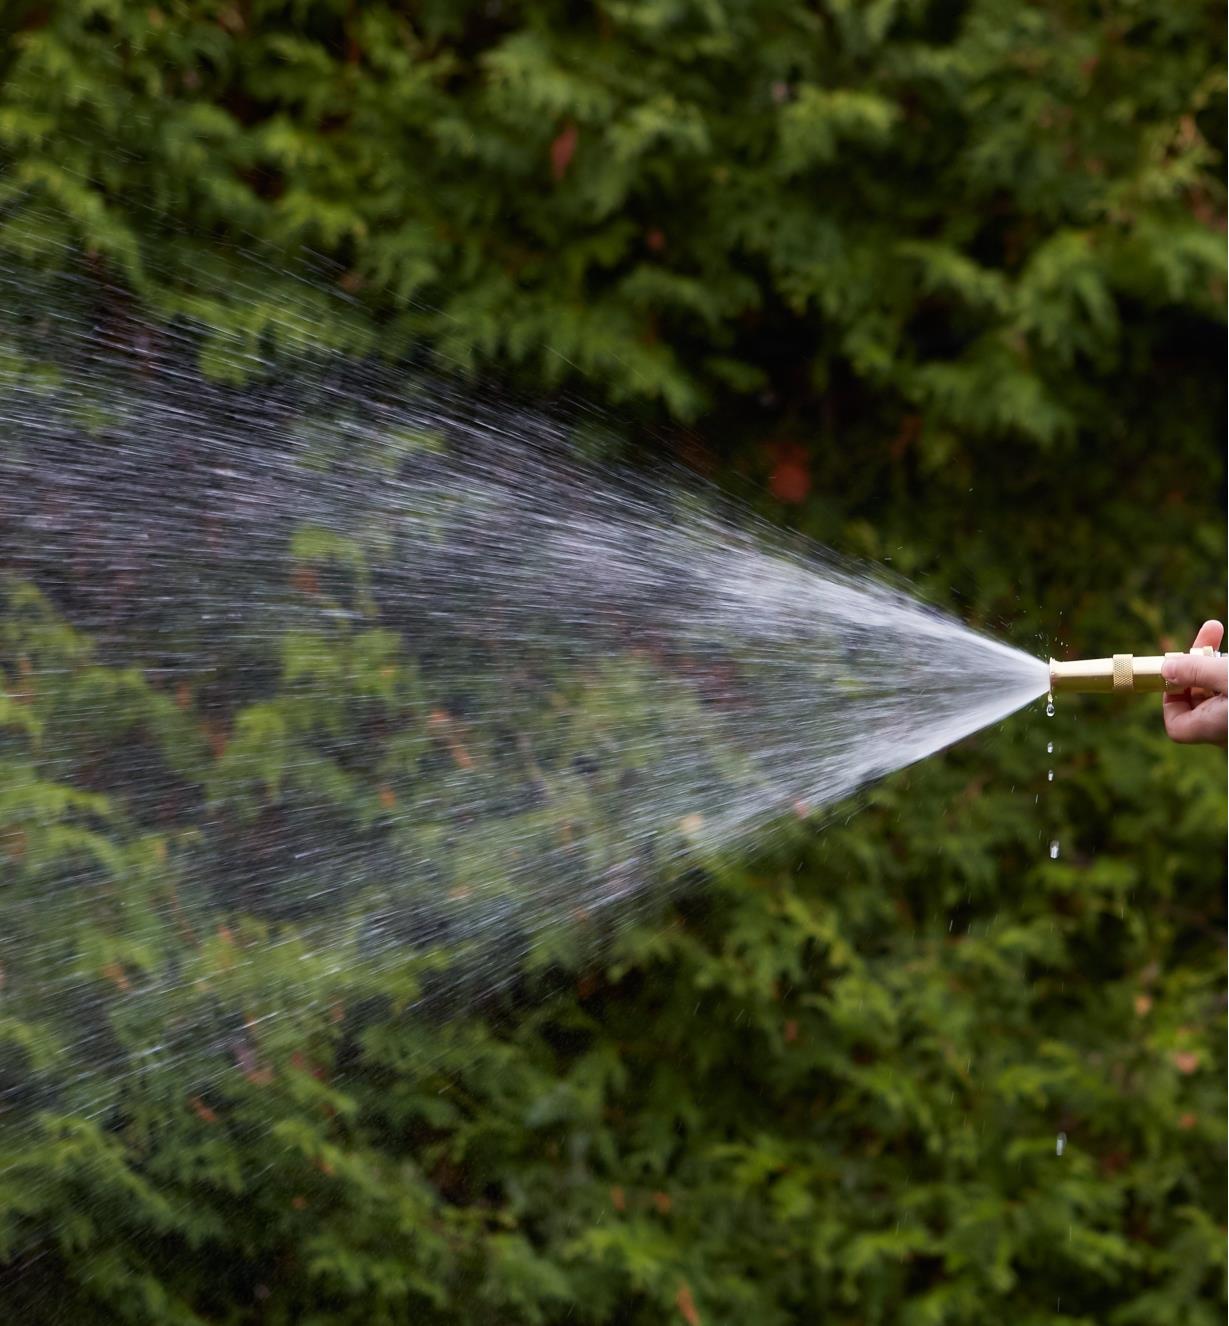 Brass Hose Nozzle spraying a medium stream of water